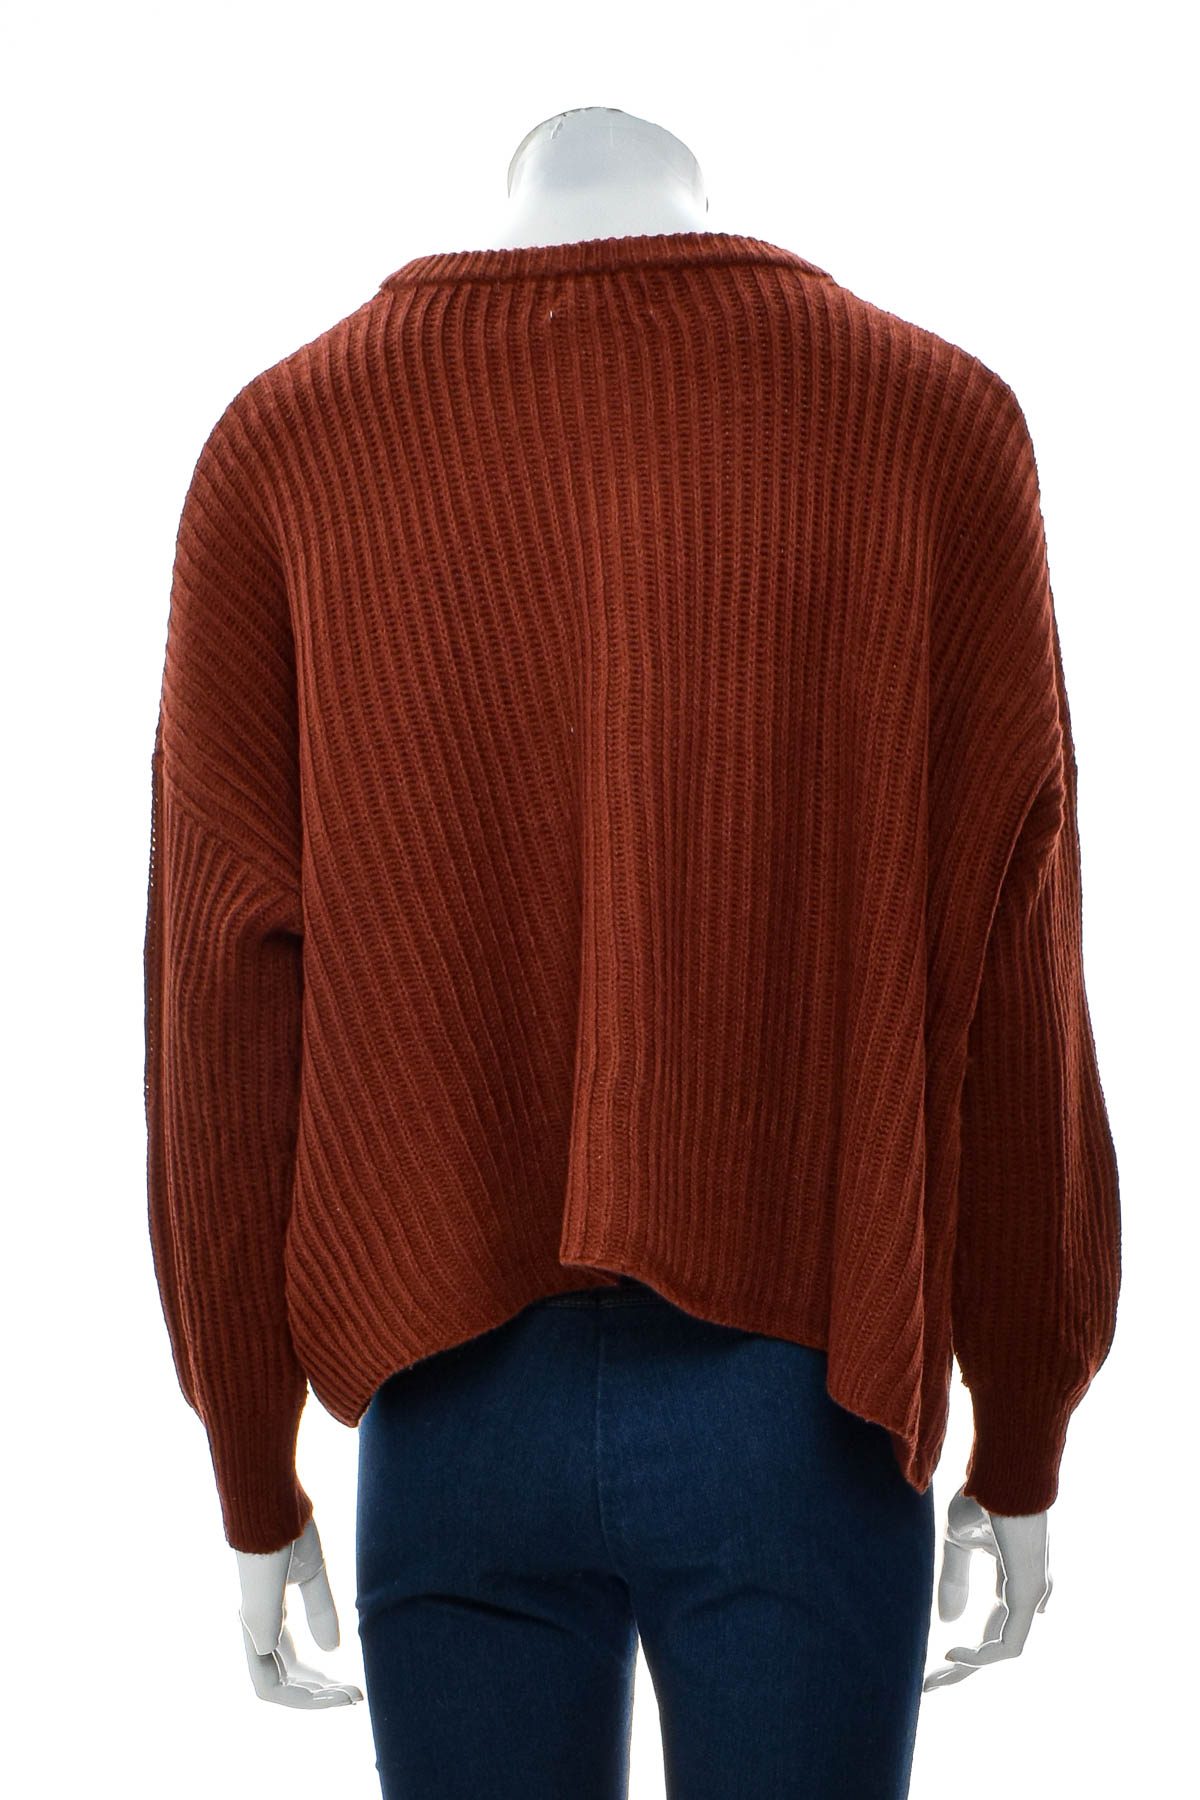 Women's sweater - Poof Apparel - 1